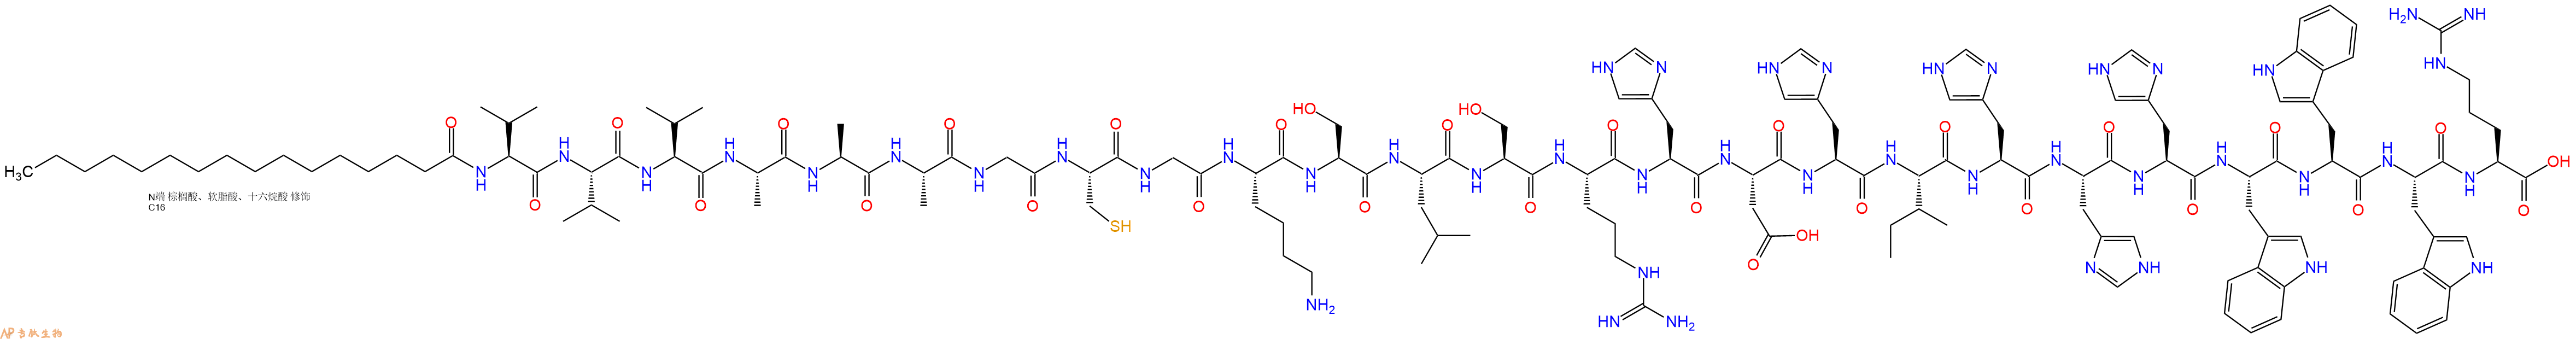 专肽生物产品棕榈酸-VVVAAAGCGKSLSRHDHIHHHWWWR